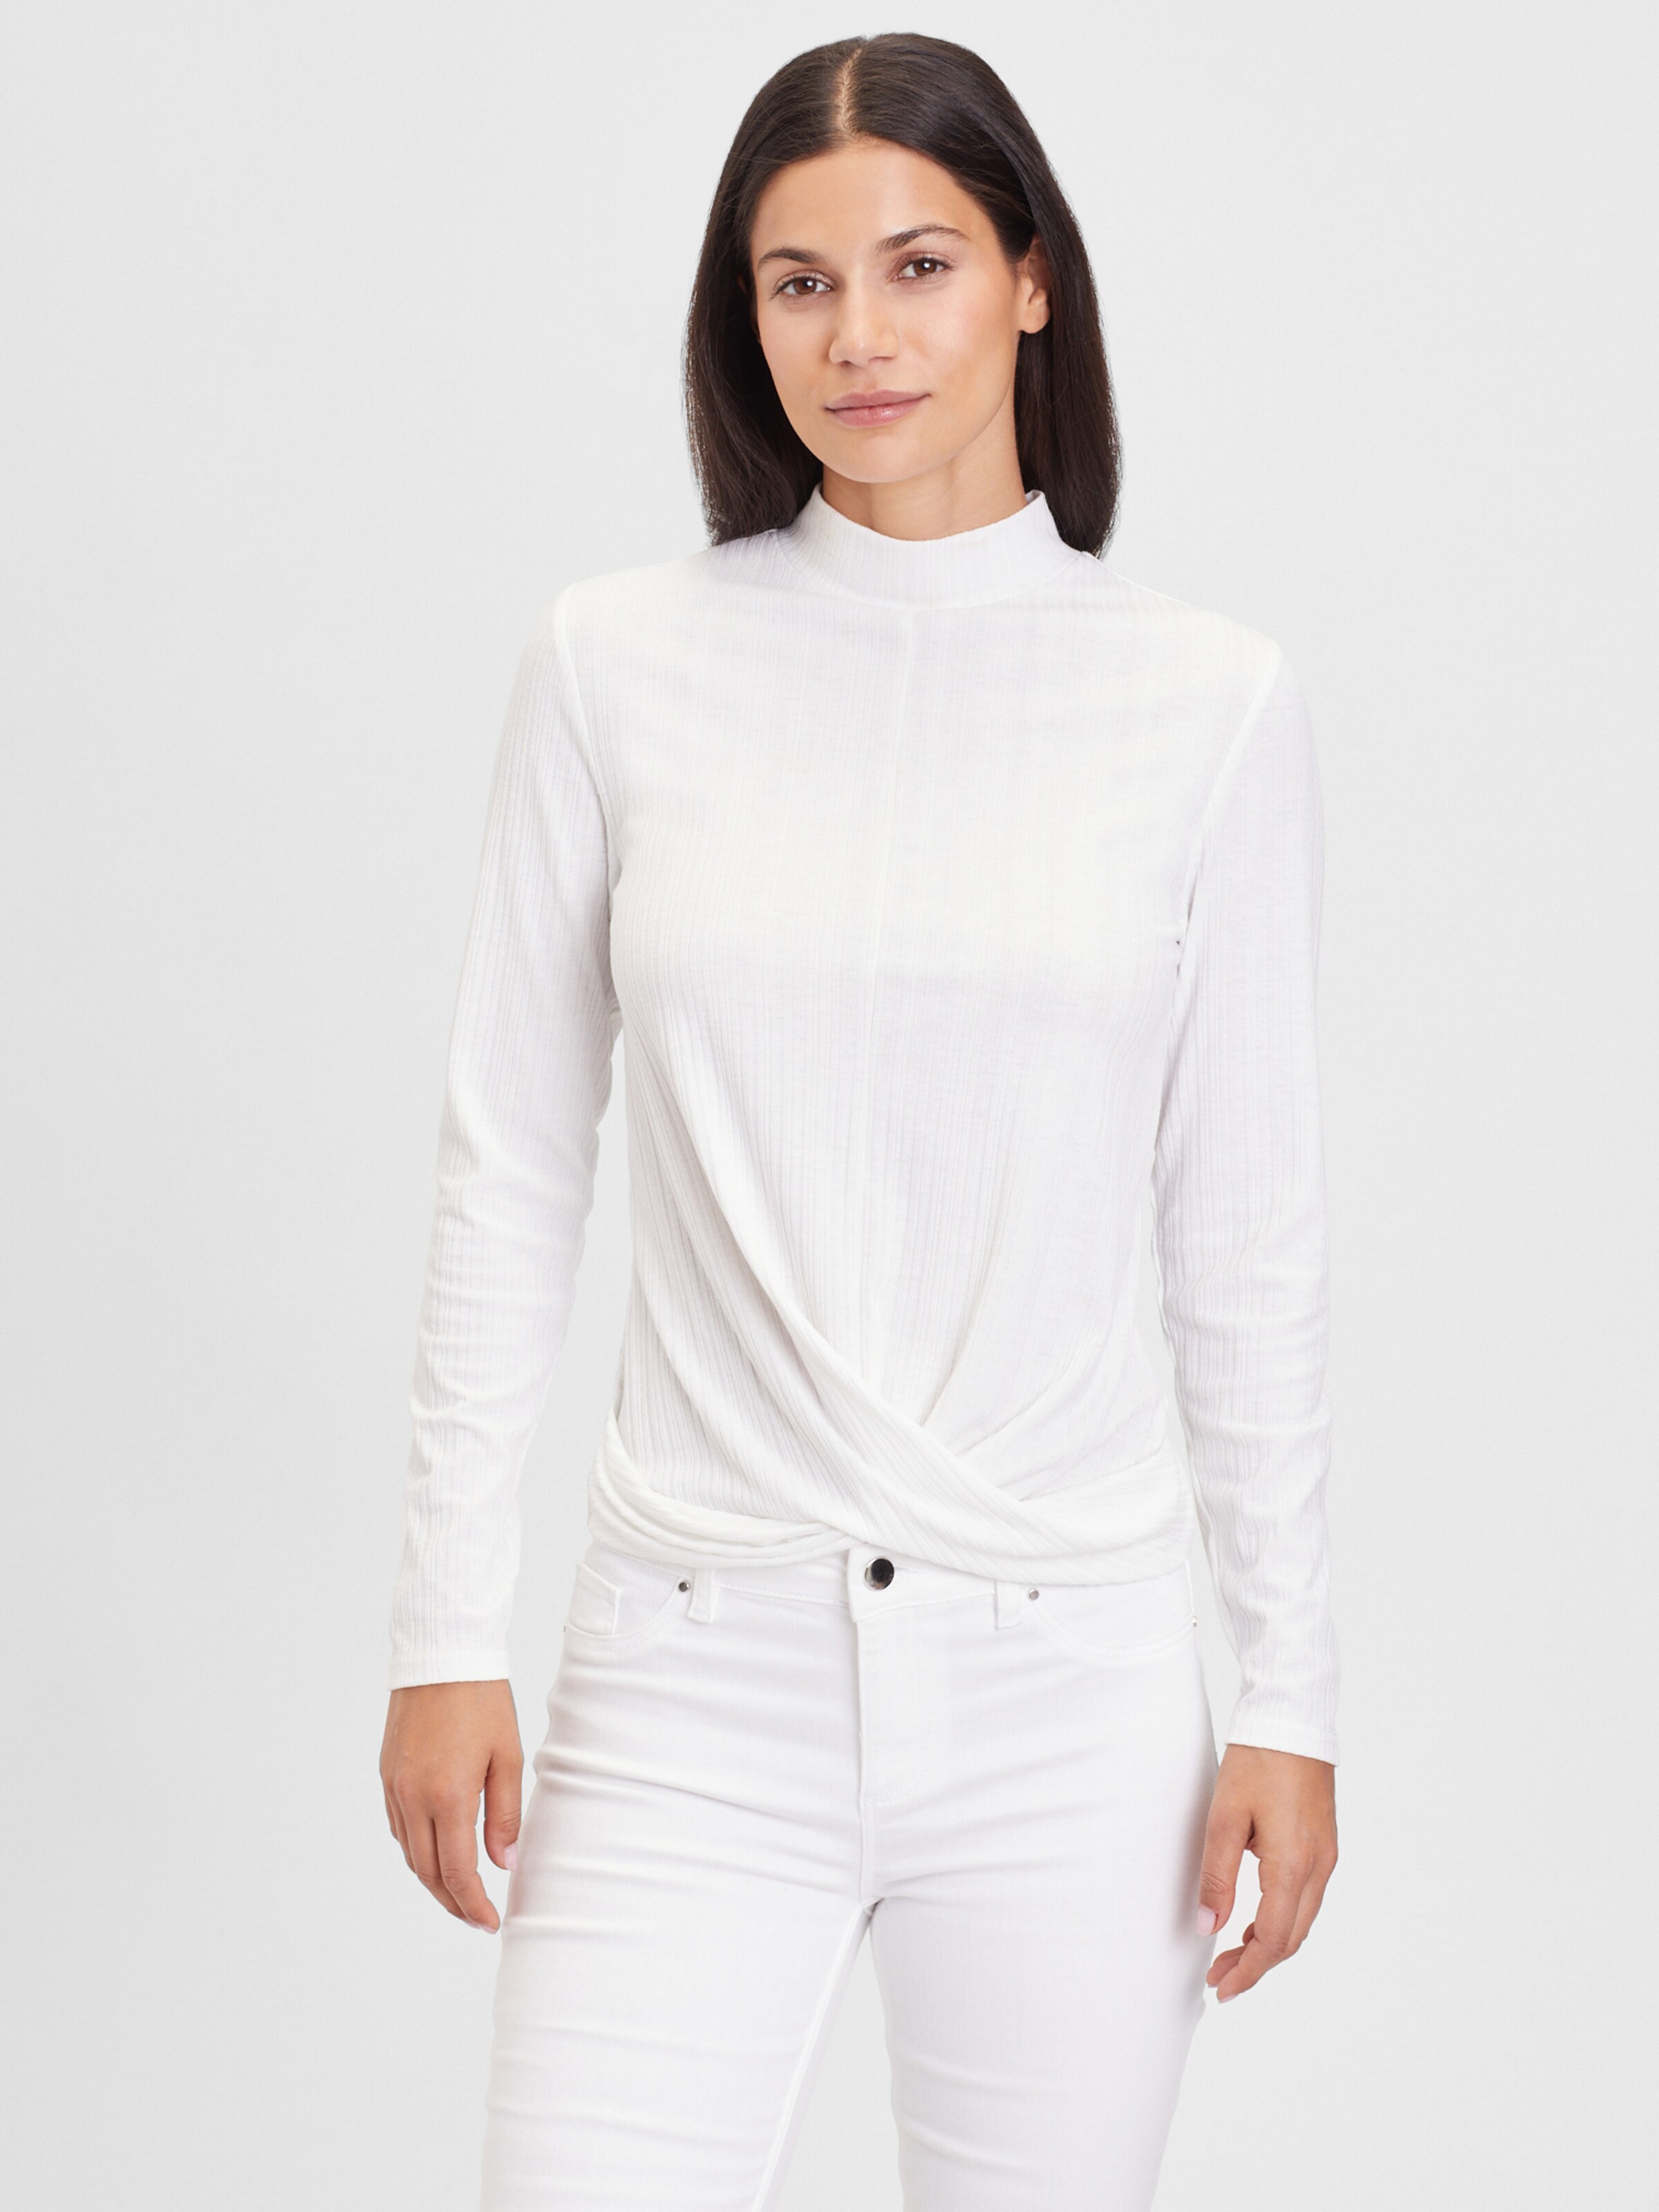 Frauen Shirts & Tops LASCANA Shirt in Schwarz, Weiß - NW64561